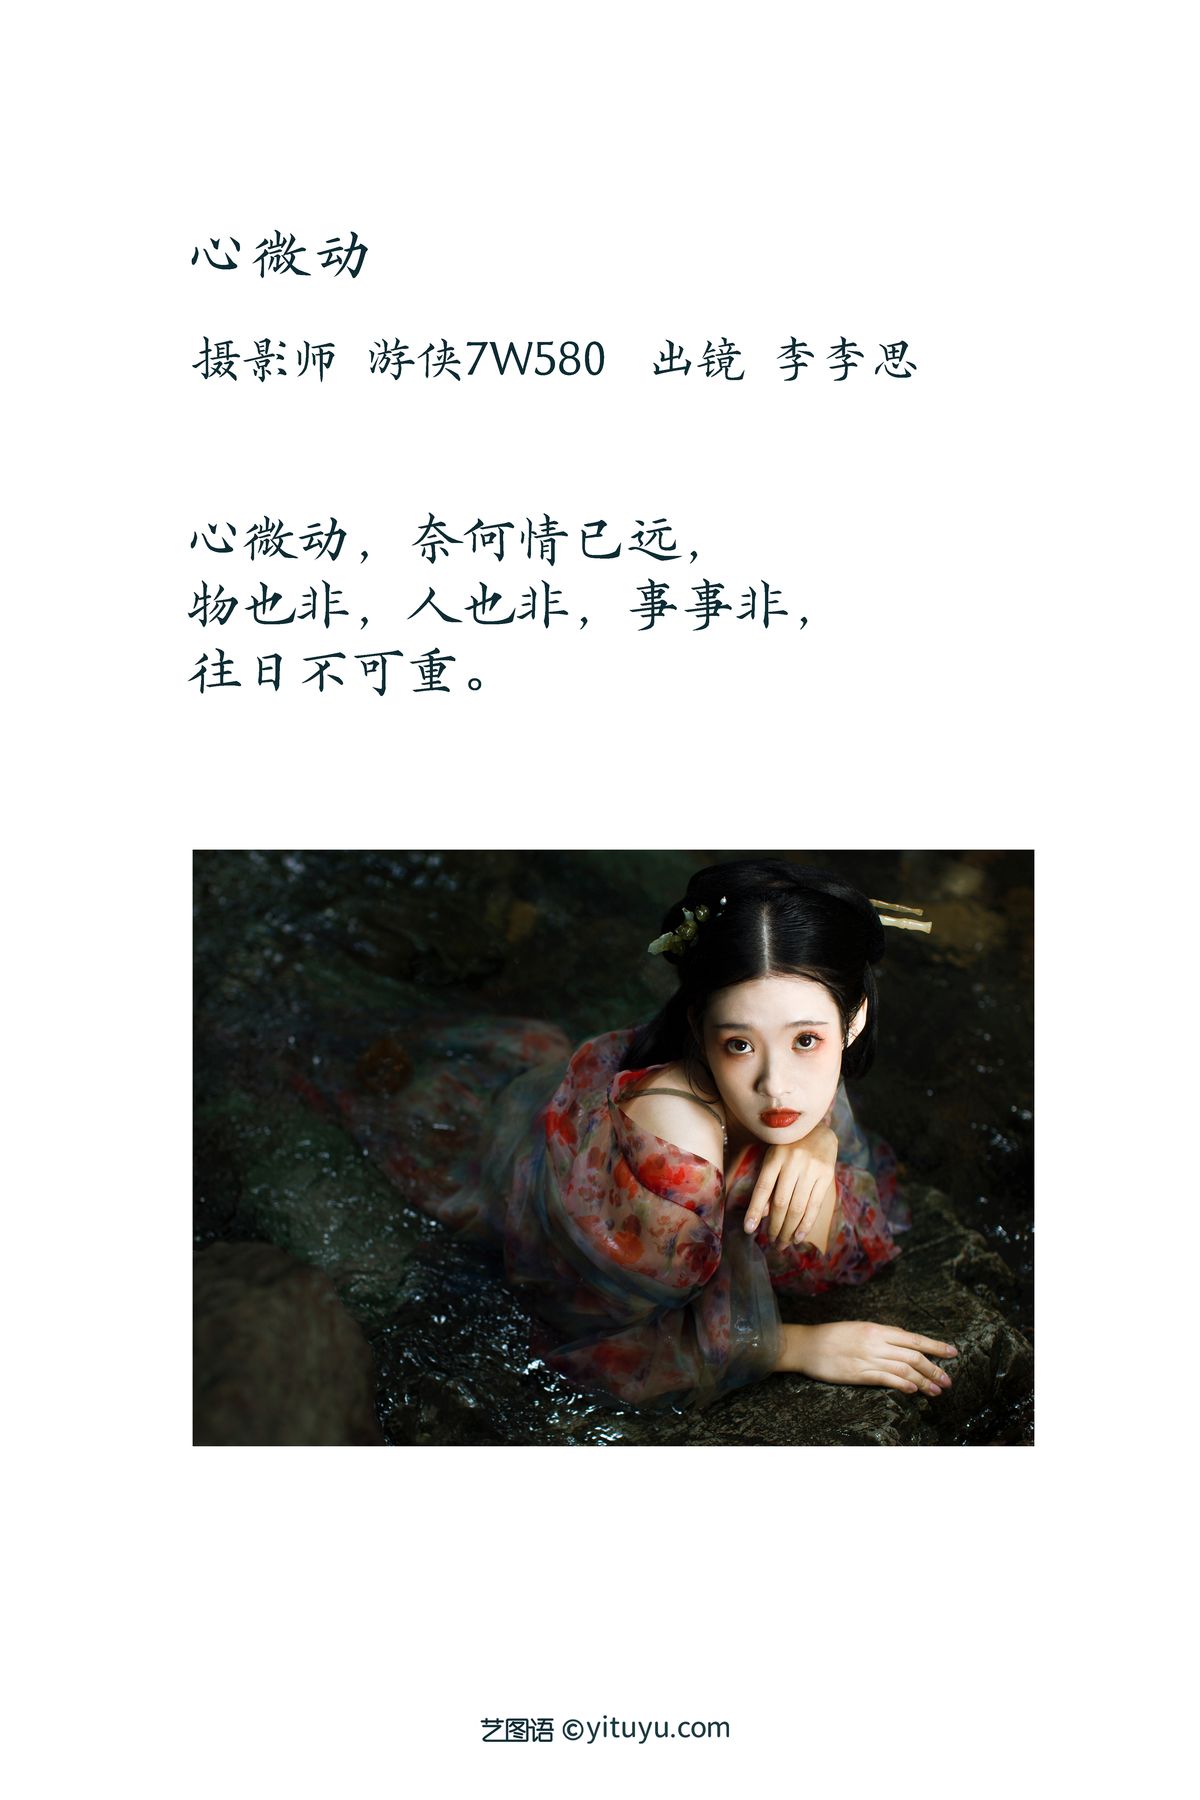 YiTuYu艺图语 Vol 3072 Li Li Si 0001 5066588697.jpg